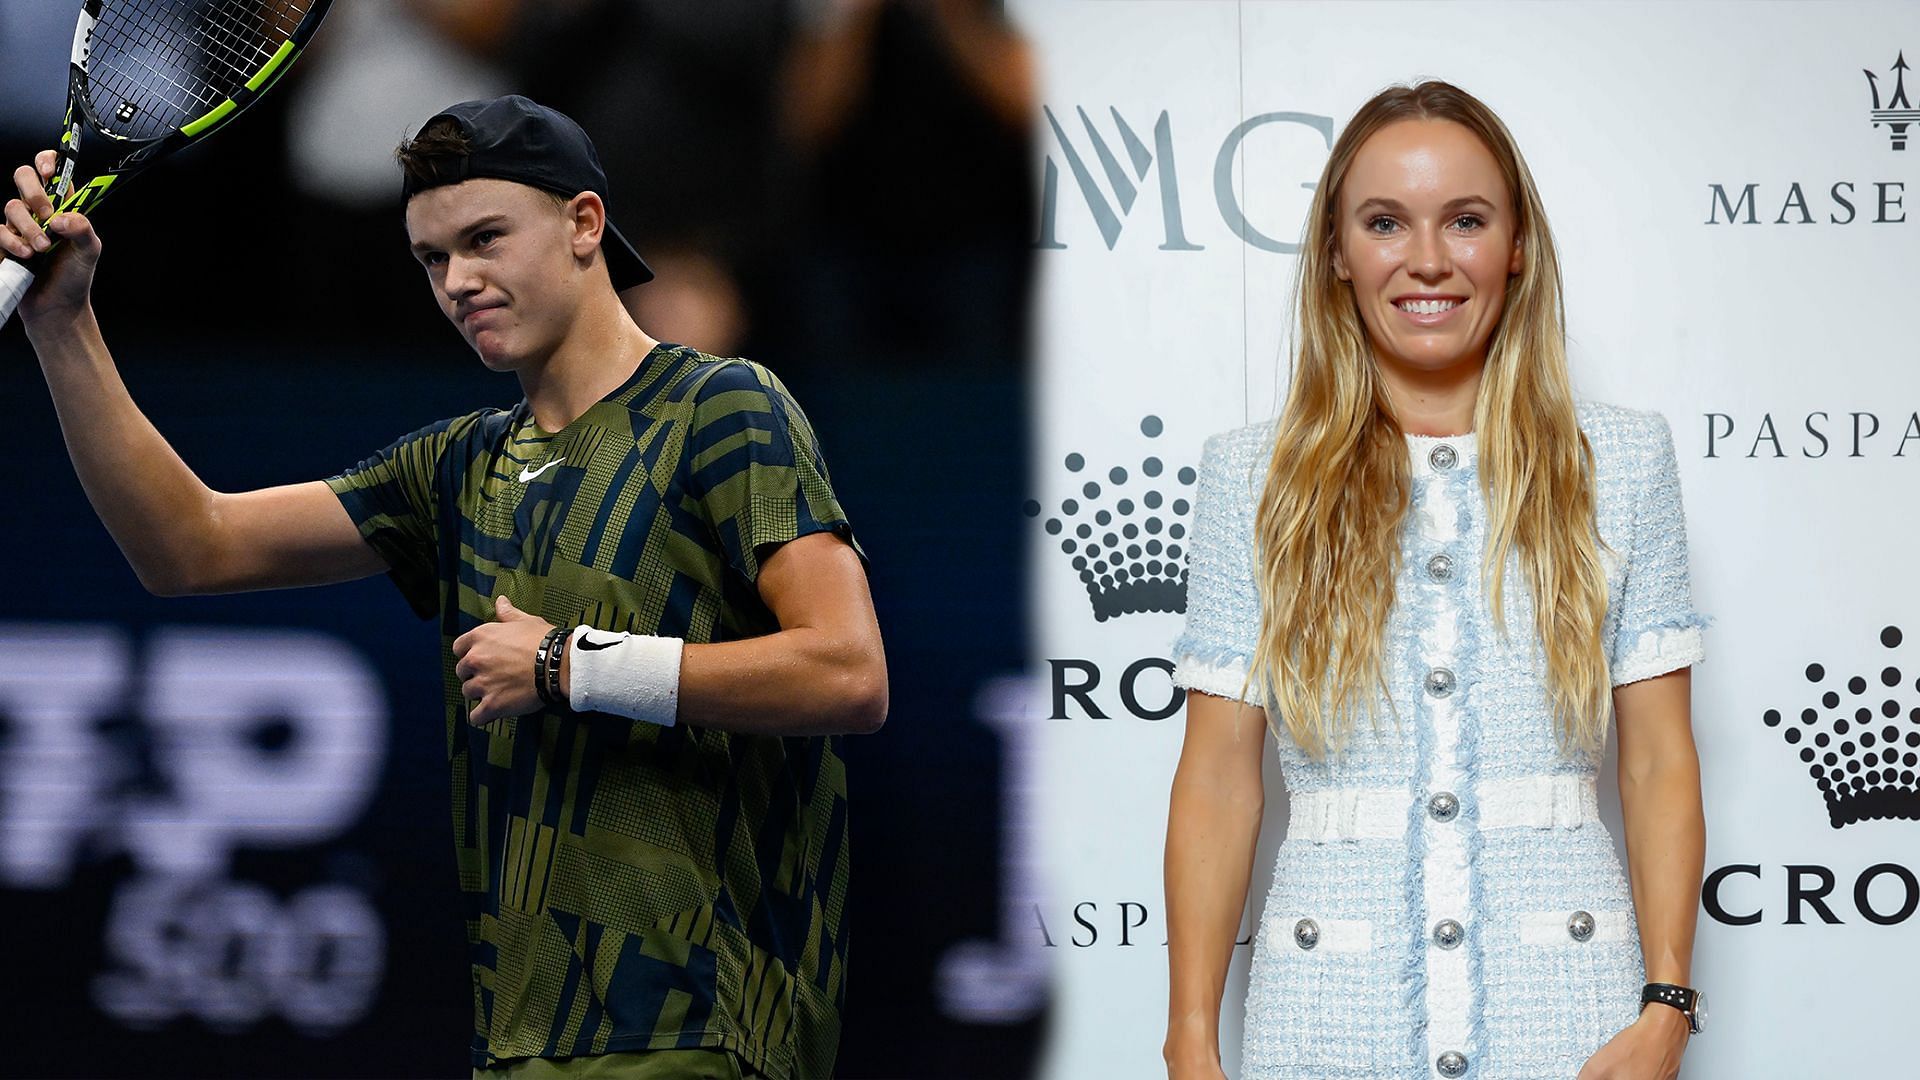 Caroline Wozniacki congratulated Holger Rune on reaching the final of the Paris Masters